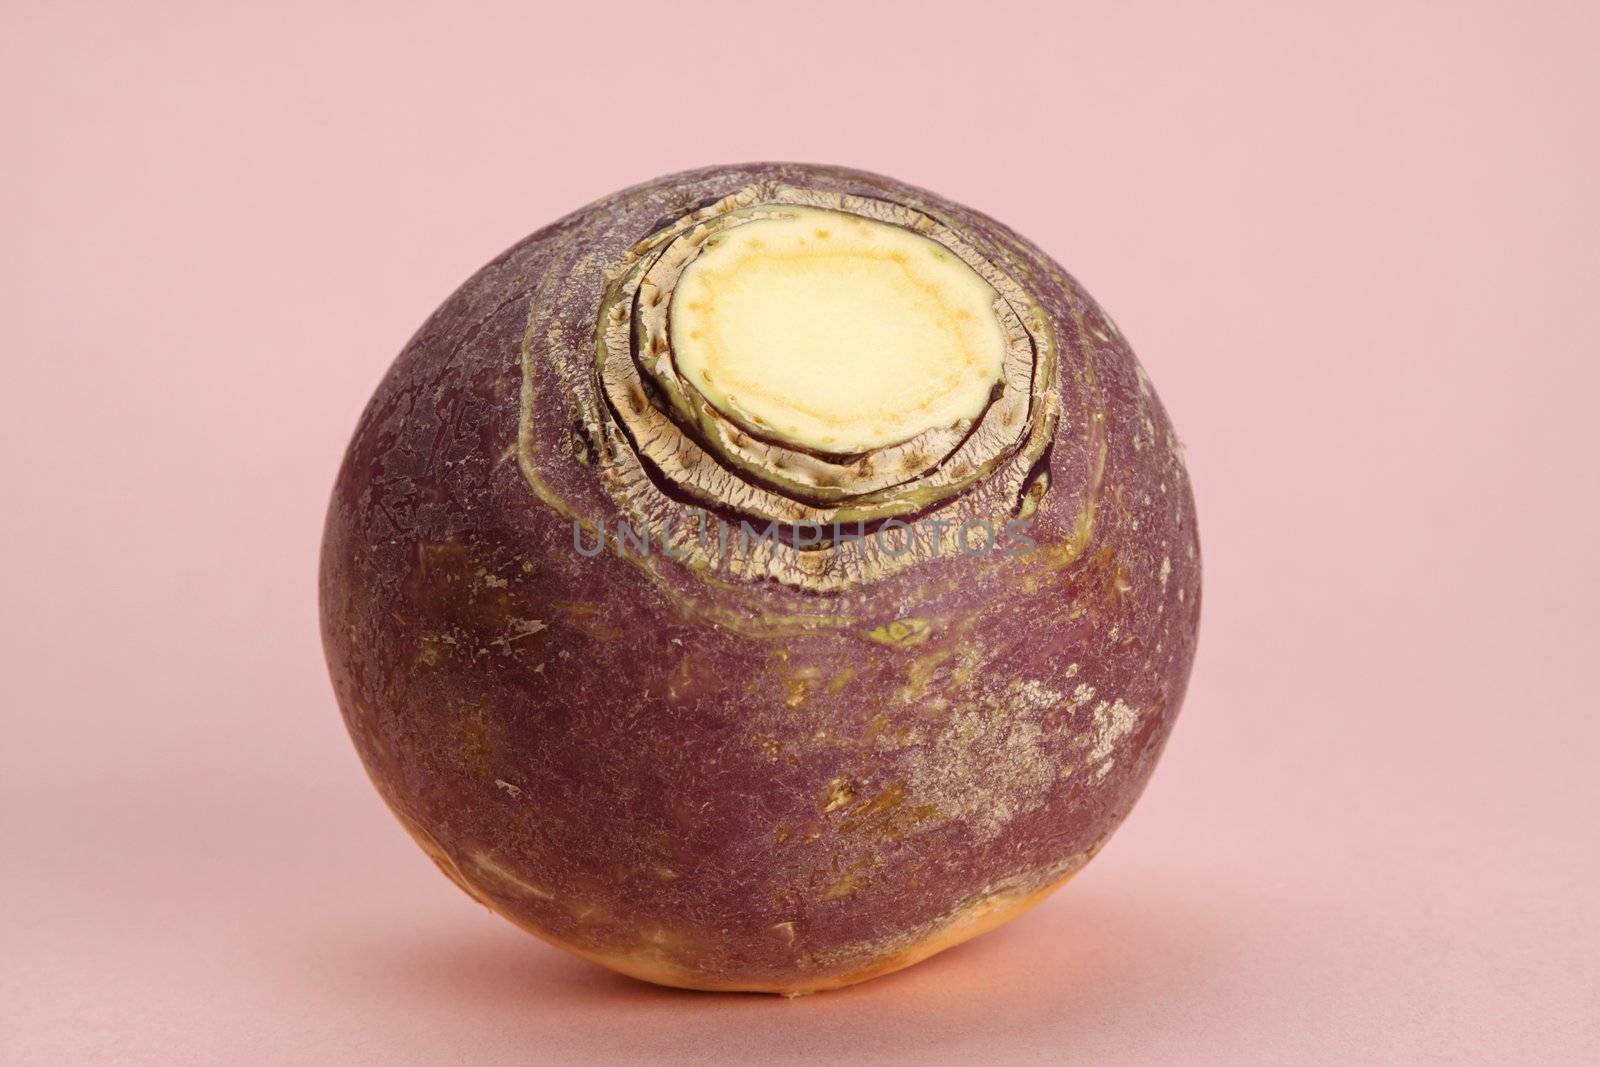 turnip by lanalanglois